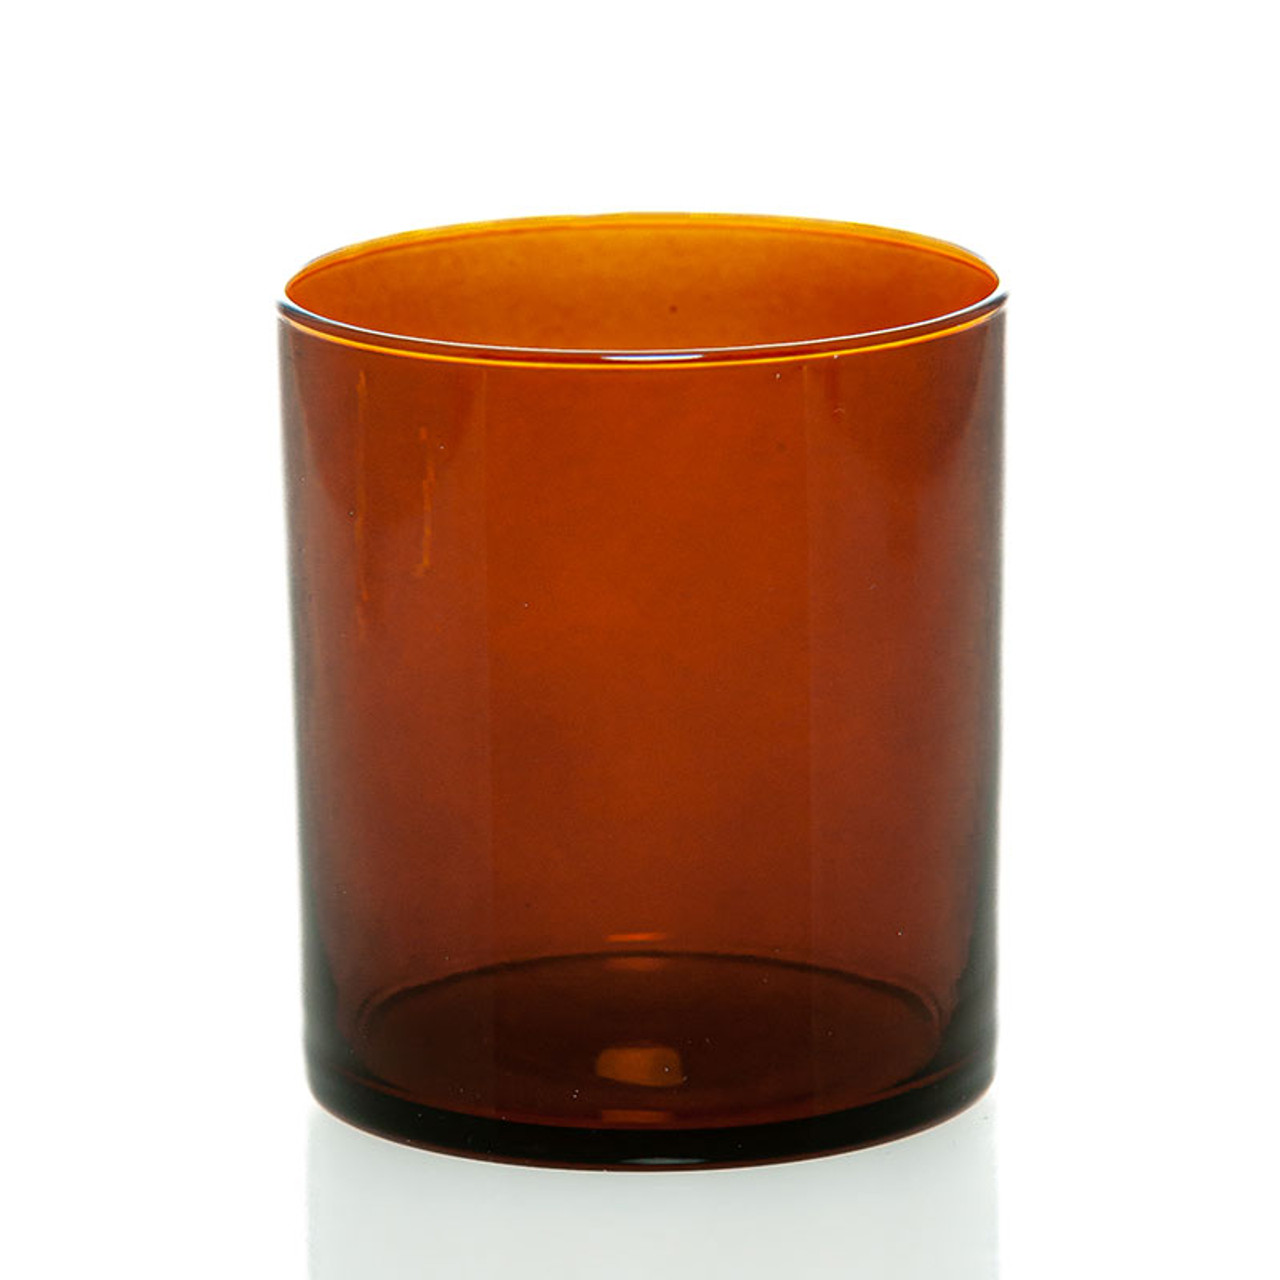 Jar - Cotton Candy 12.5 oz. Mason Jar Colored Candle